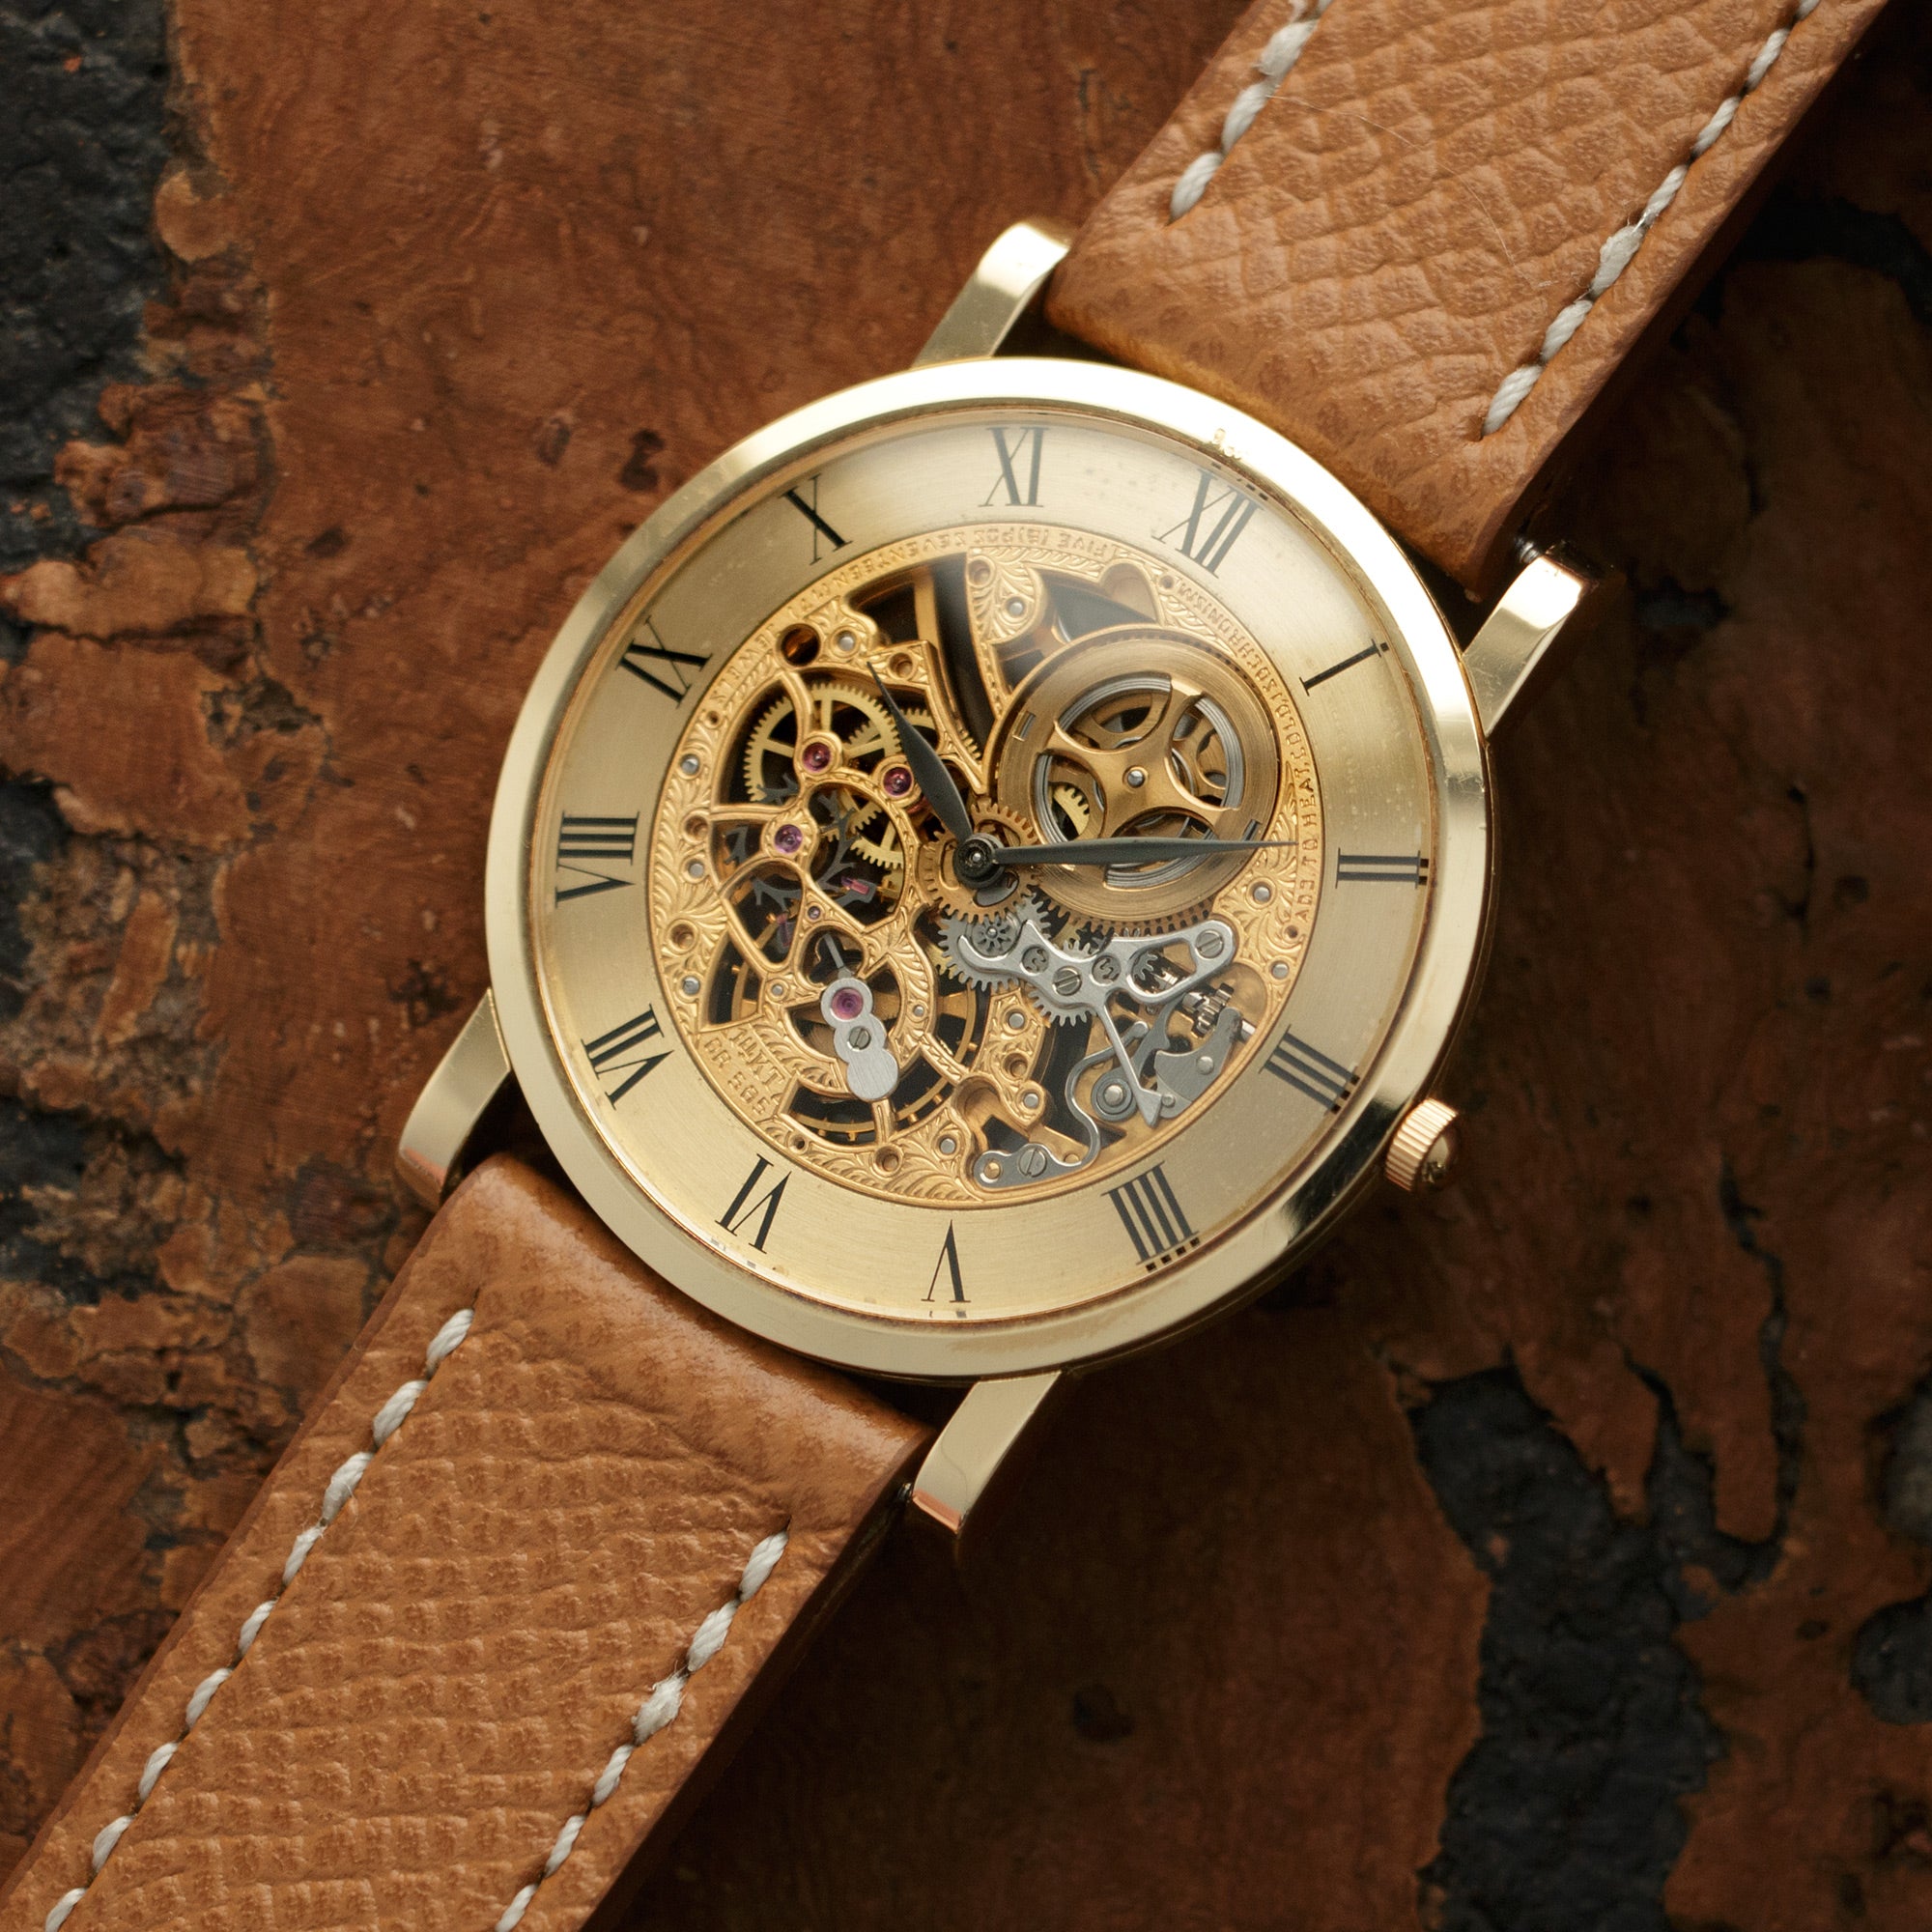 Audemars Piguet - Audemars Piguet Yellow Gold Skeletonized Watch - The Keystone Watches